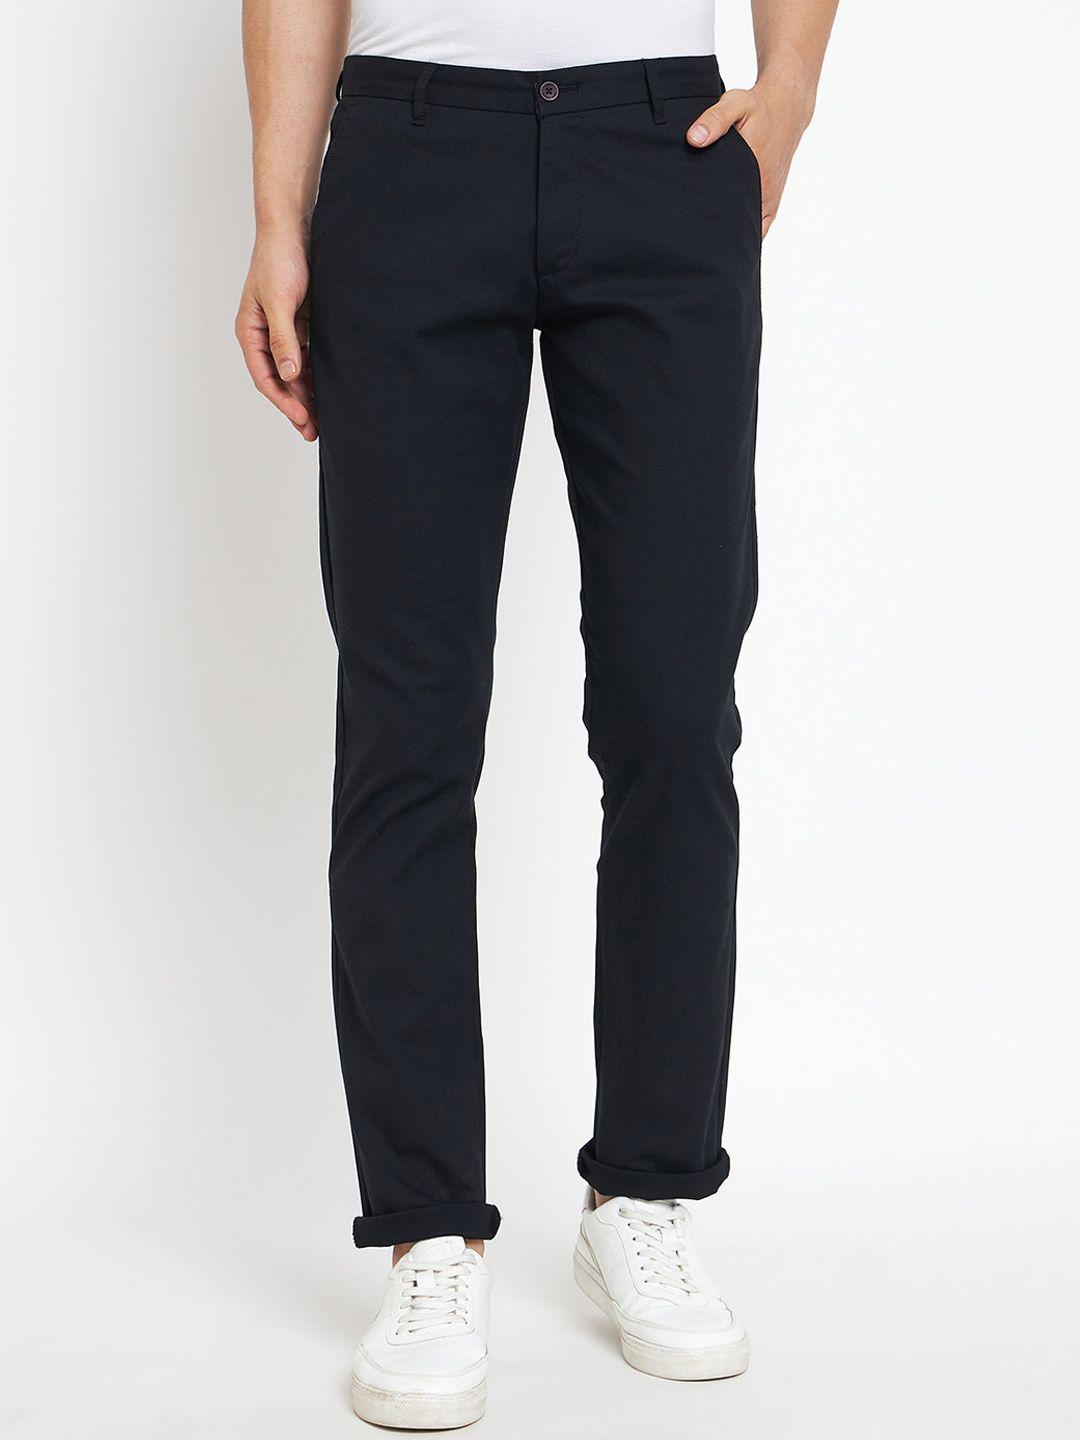 duke-men-slim-fit-cotton-mid-rise-chinos-trouser